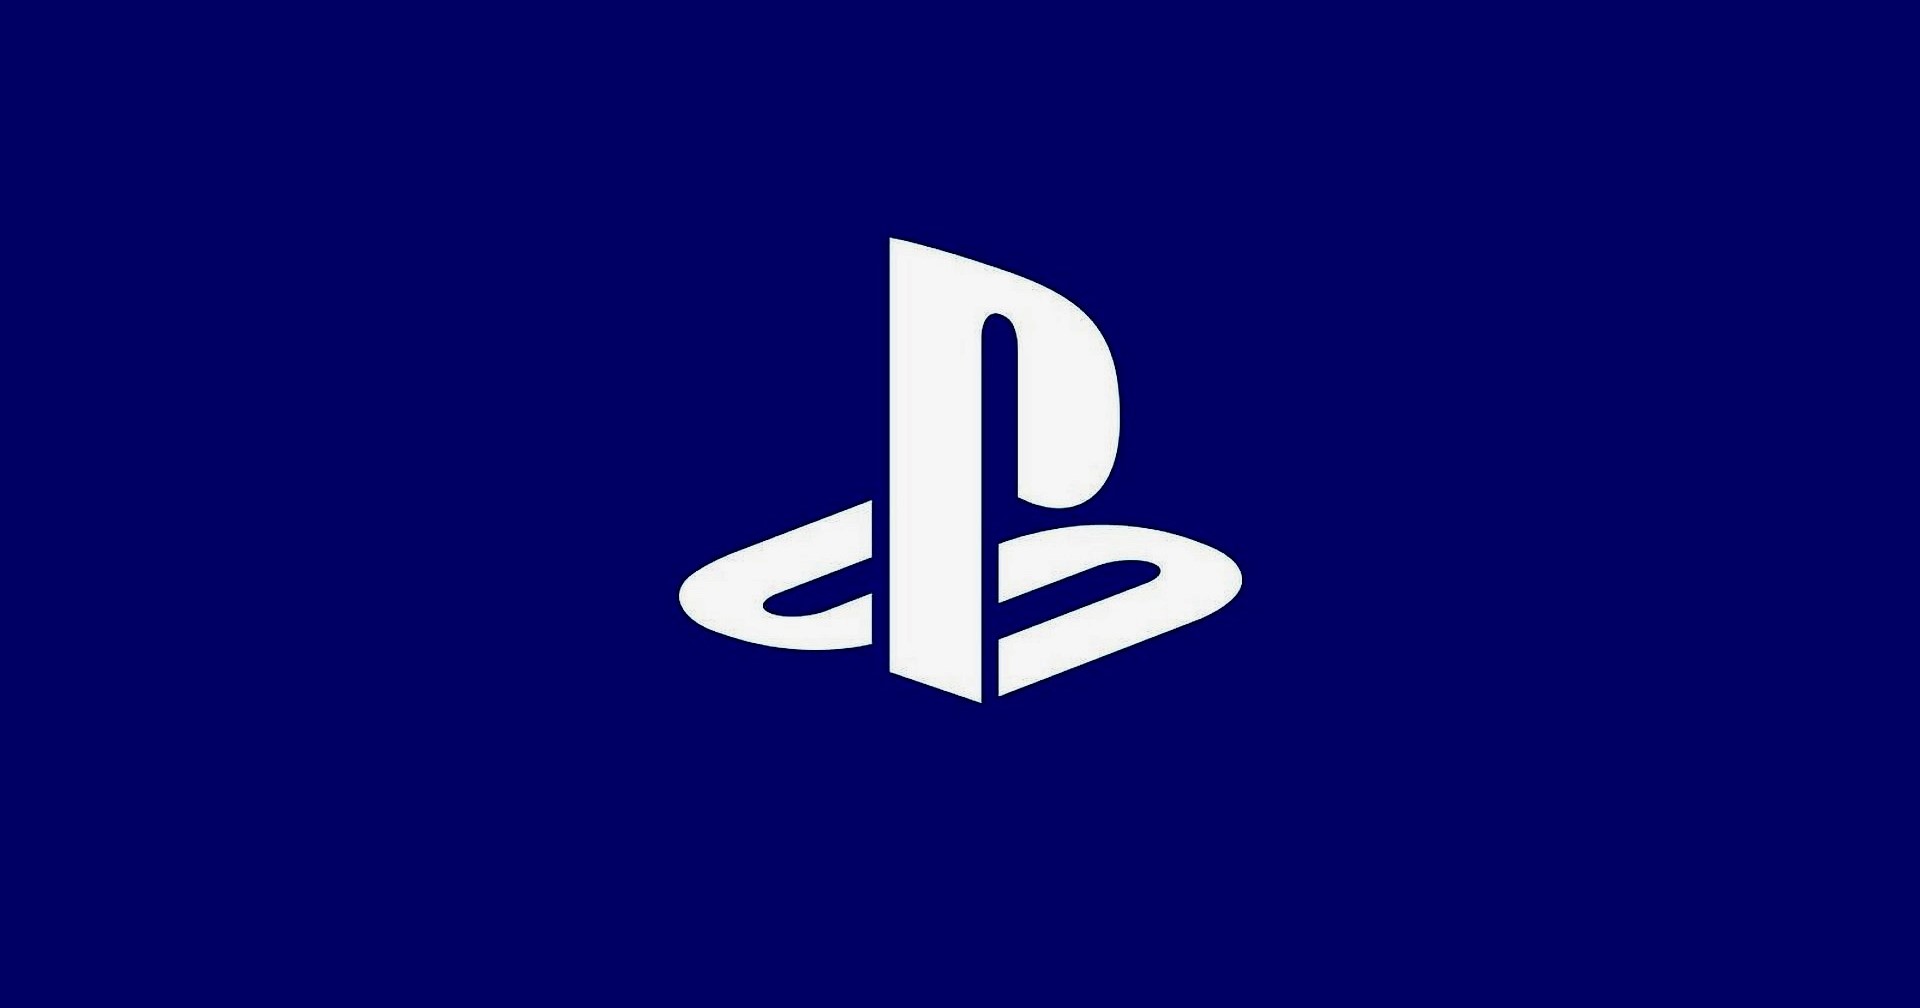 PlayStation Productions อยู่ในระหว่างสร้าง 10 โปรเจกต์ที่มีทั้งภาพยนตร์, ซีรีส์ และแอนิเมชัน